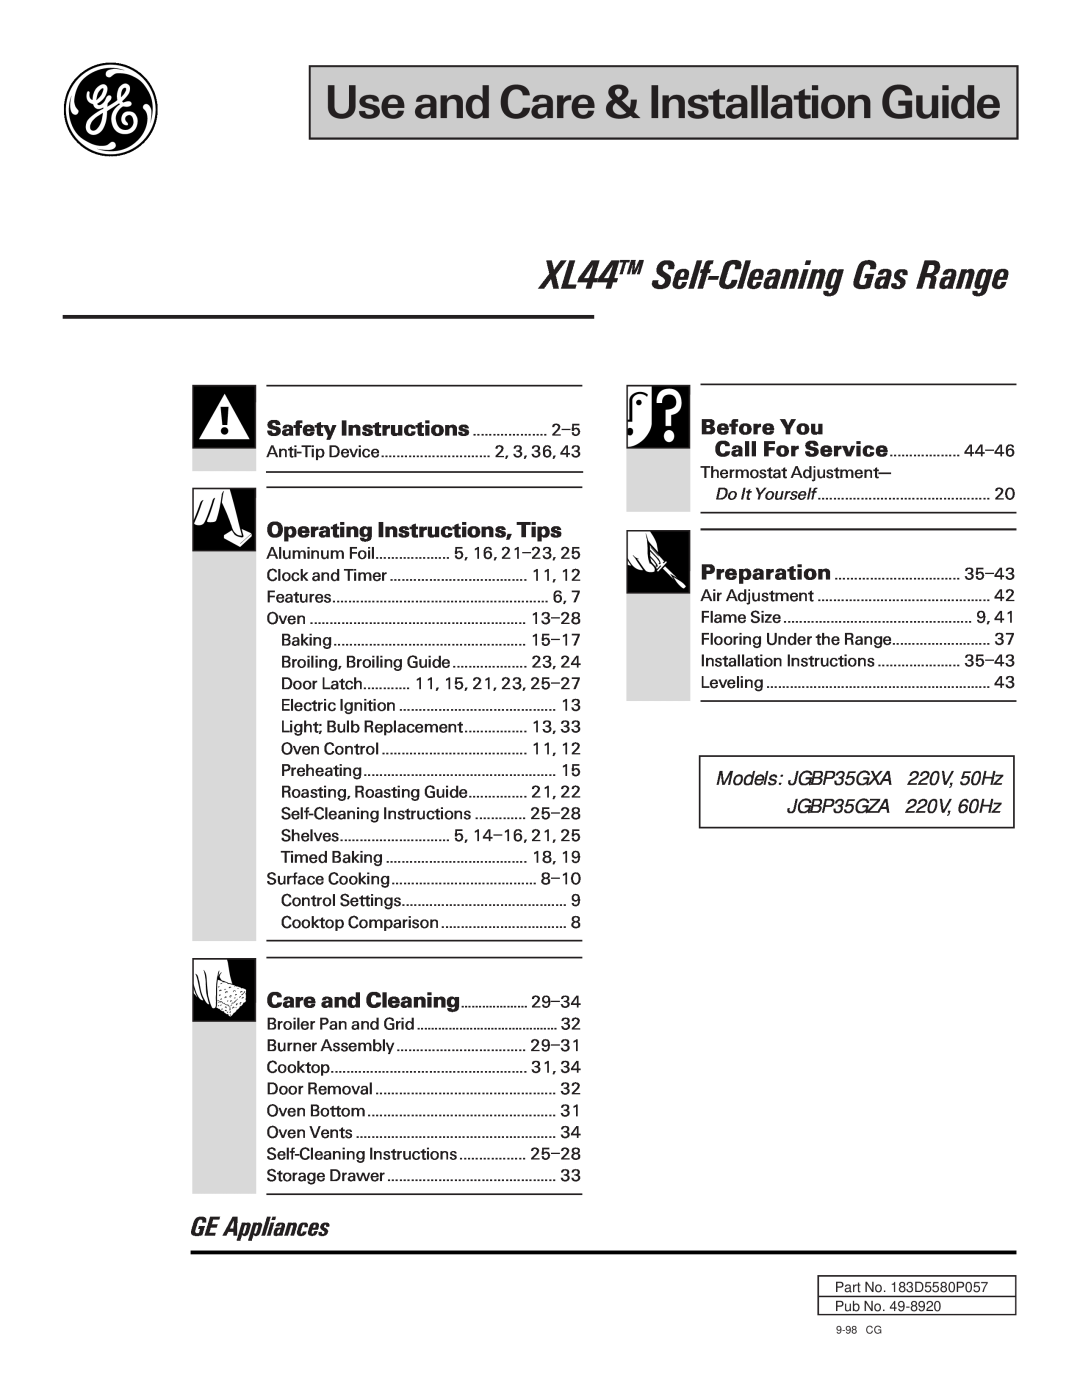 GE JGBP35GXA installation instructions Safety Instructions, Operating Instructions, Tips, Before You, GE Appliances 